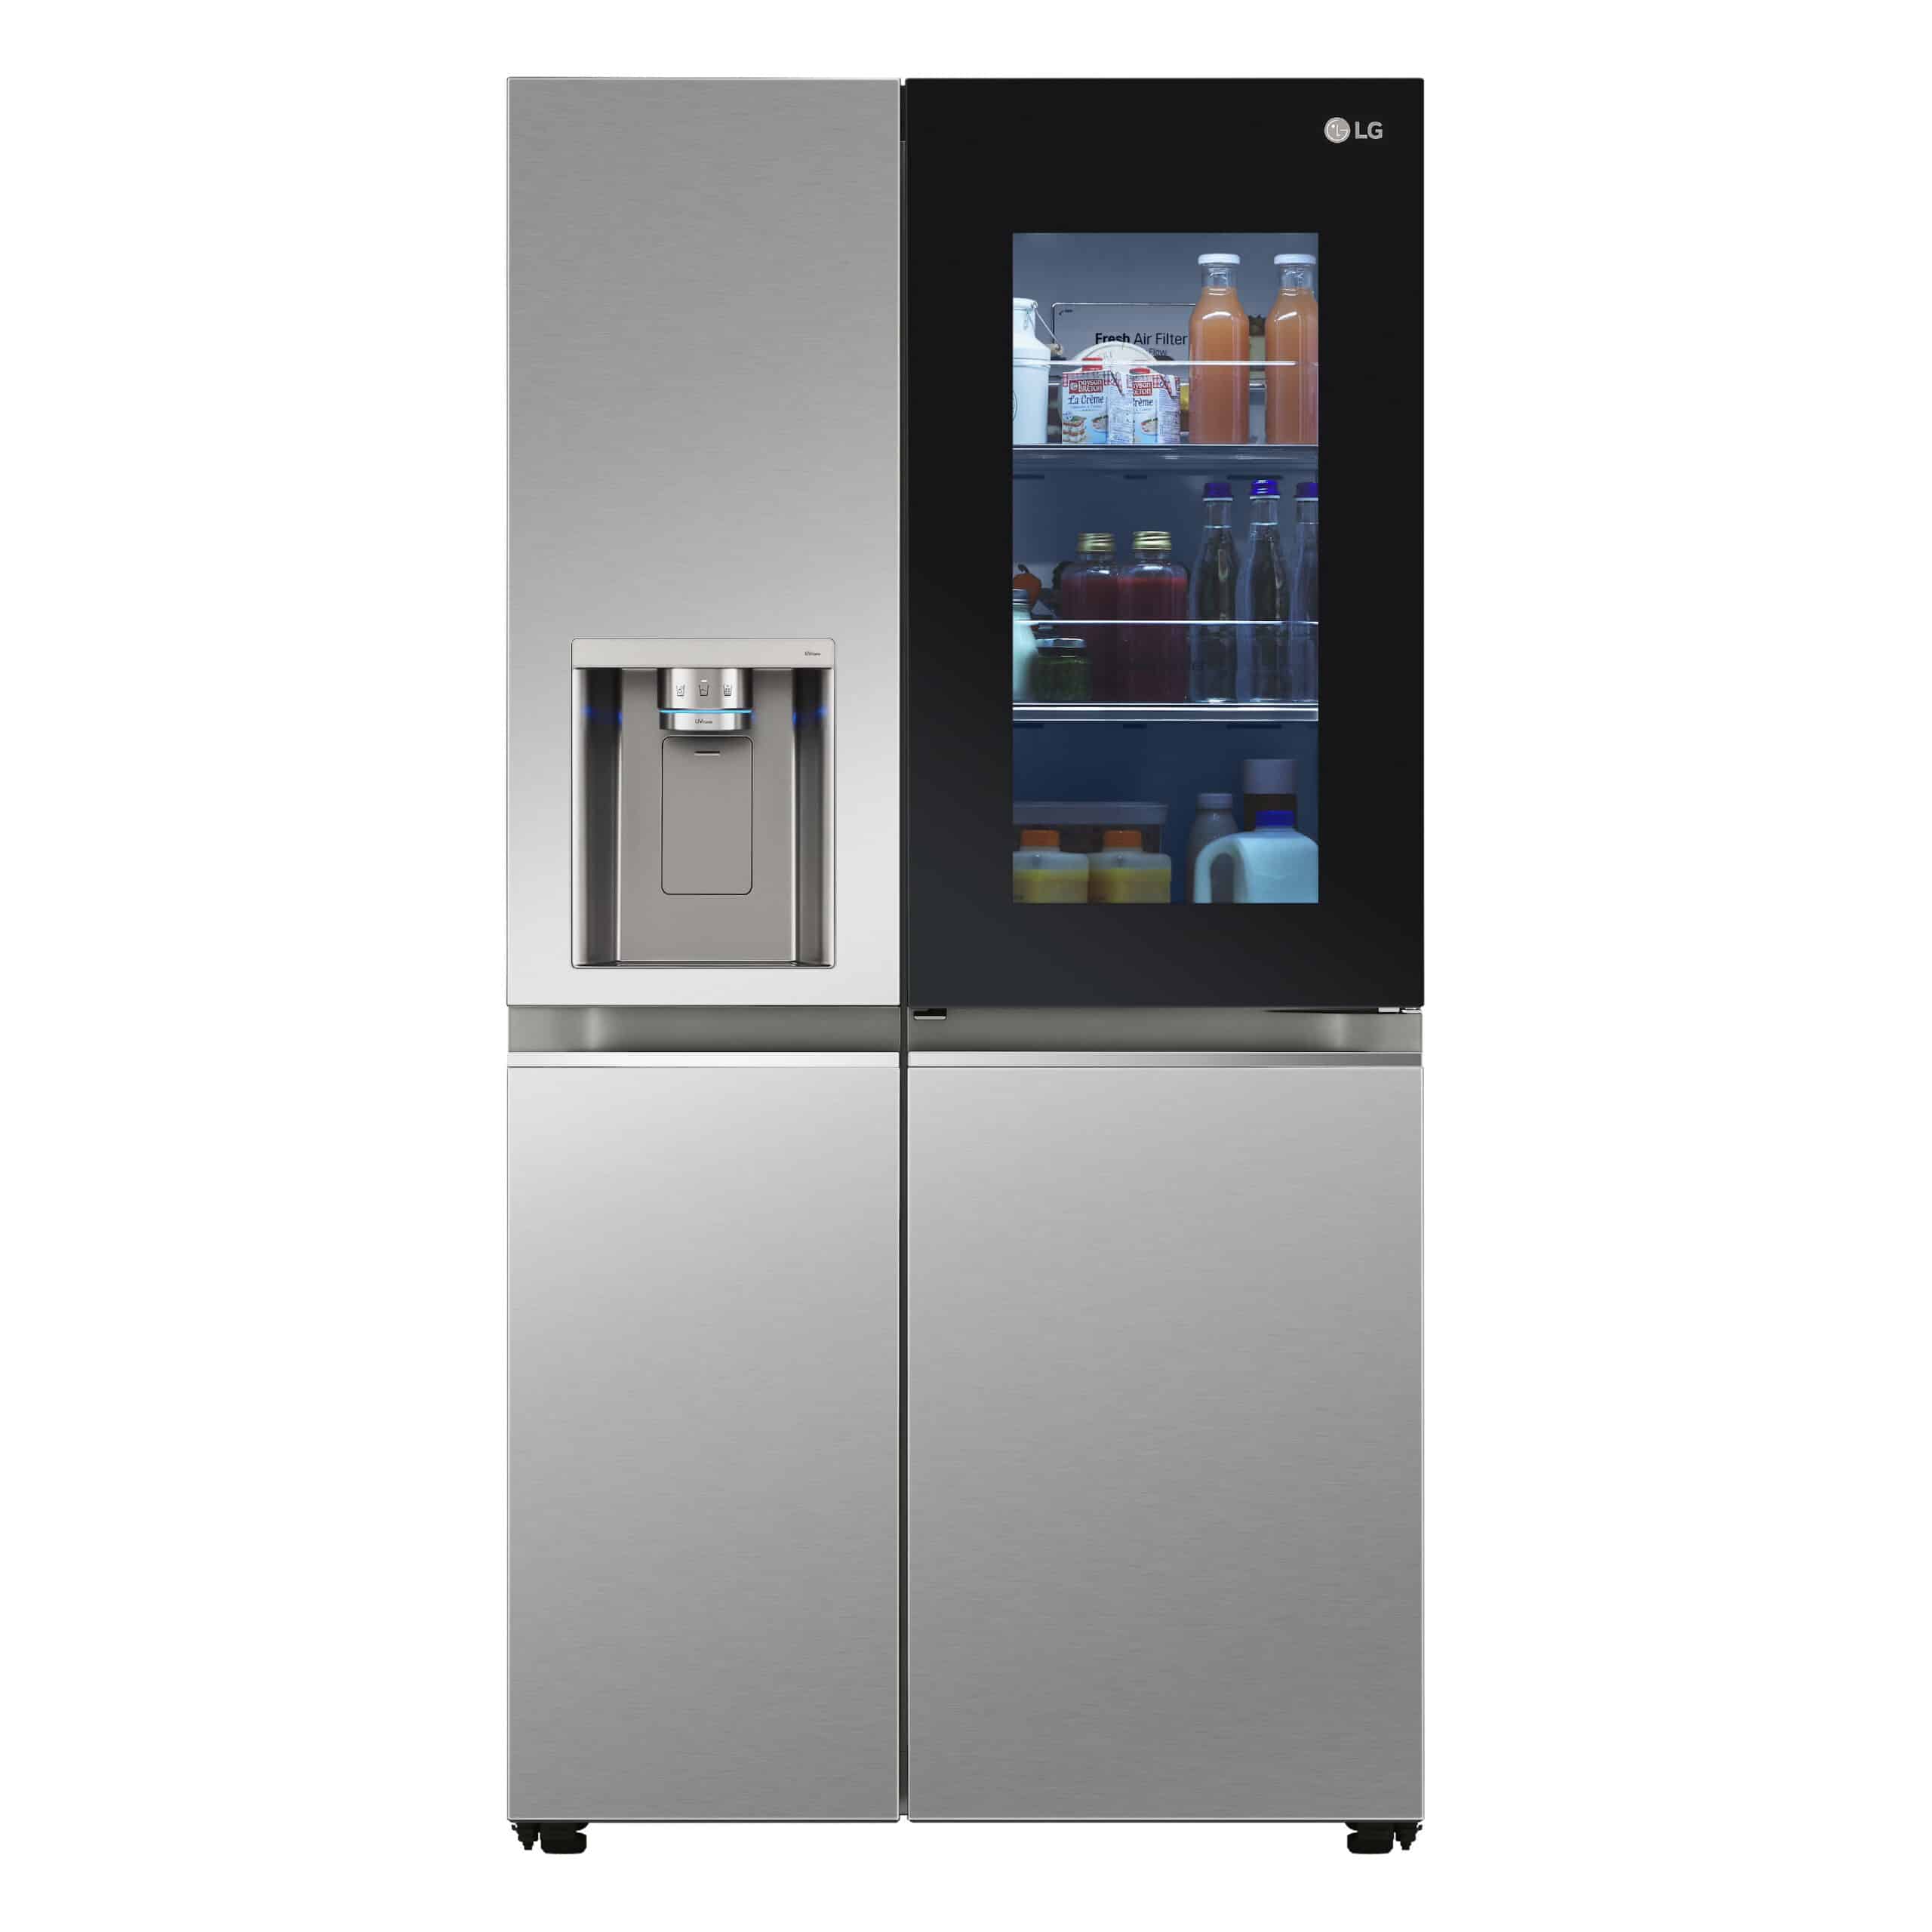 New LG Instaview Refrigerators demonstrate hygiene innovation at CES 2021 